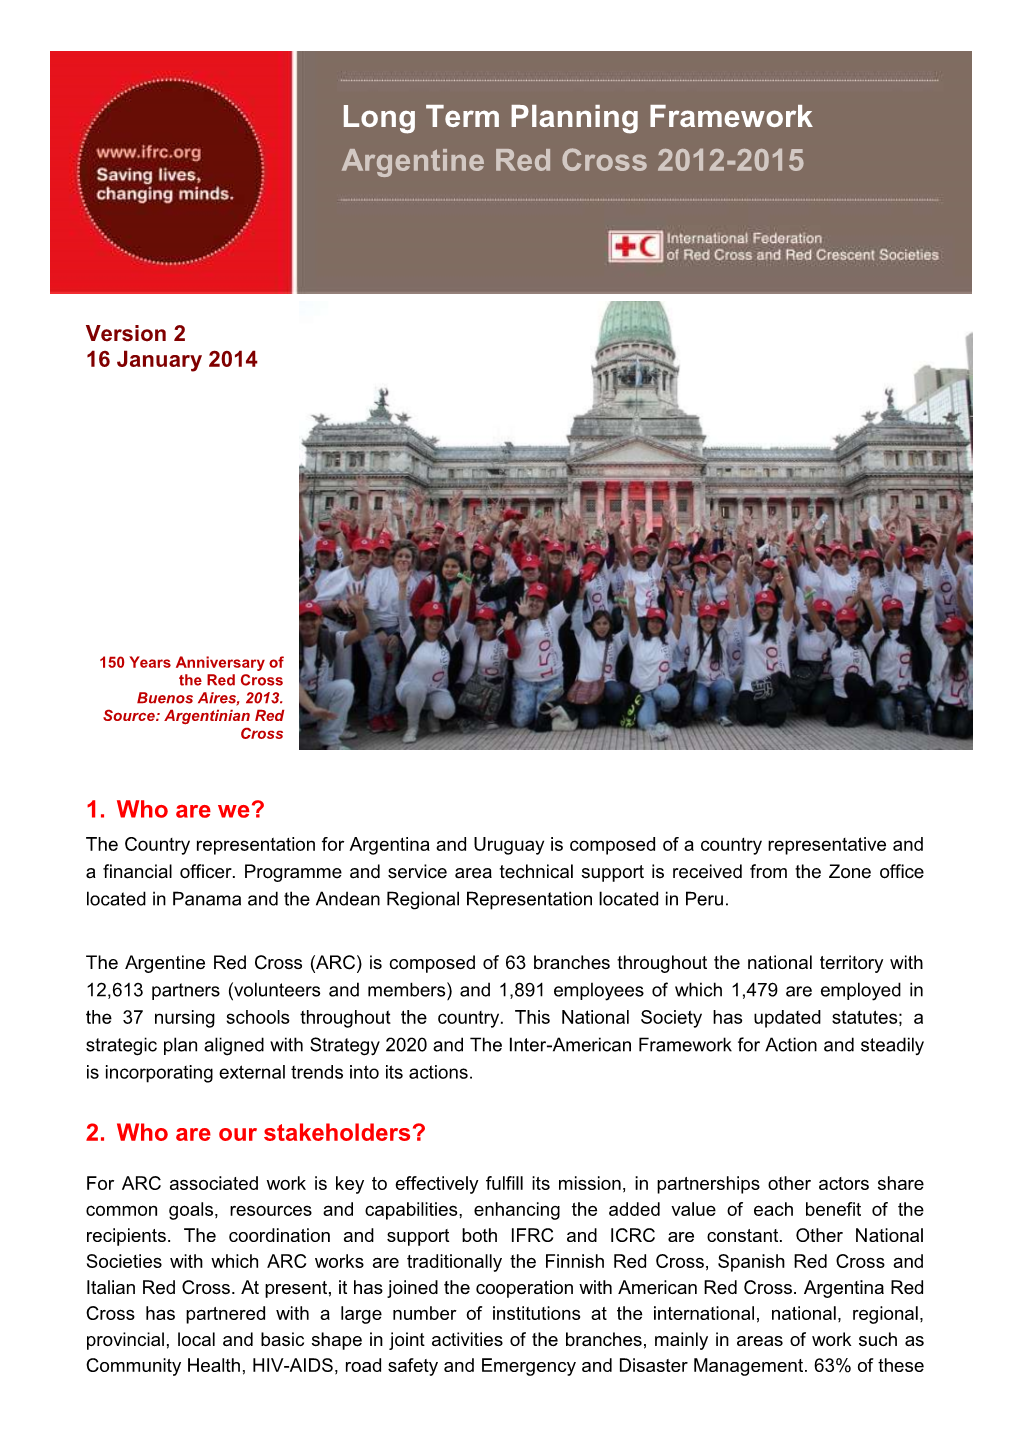 Long Term Planning Framework Argentine Red Cross 2012-2015